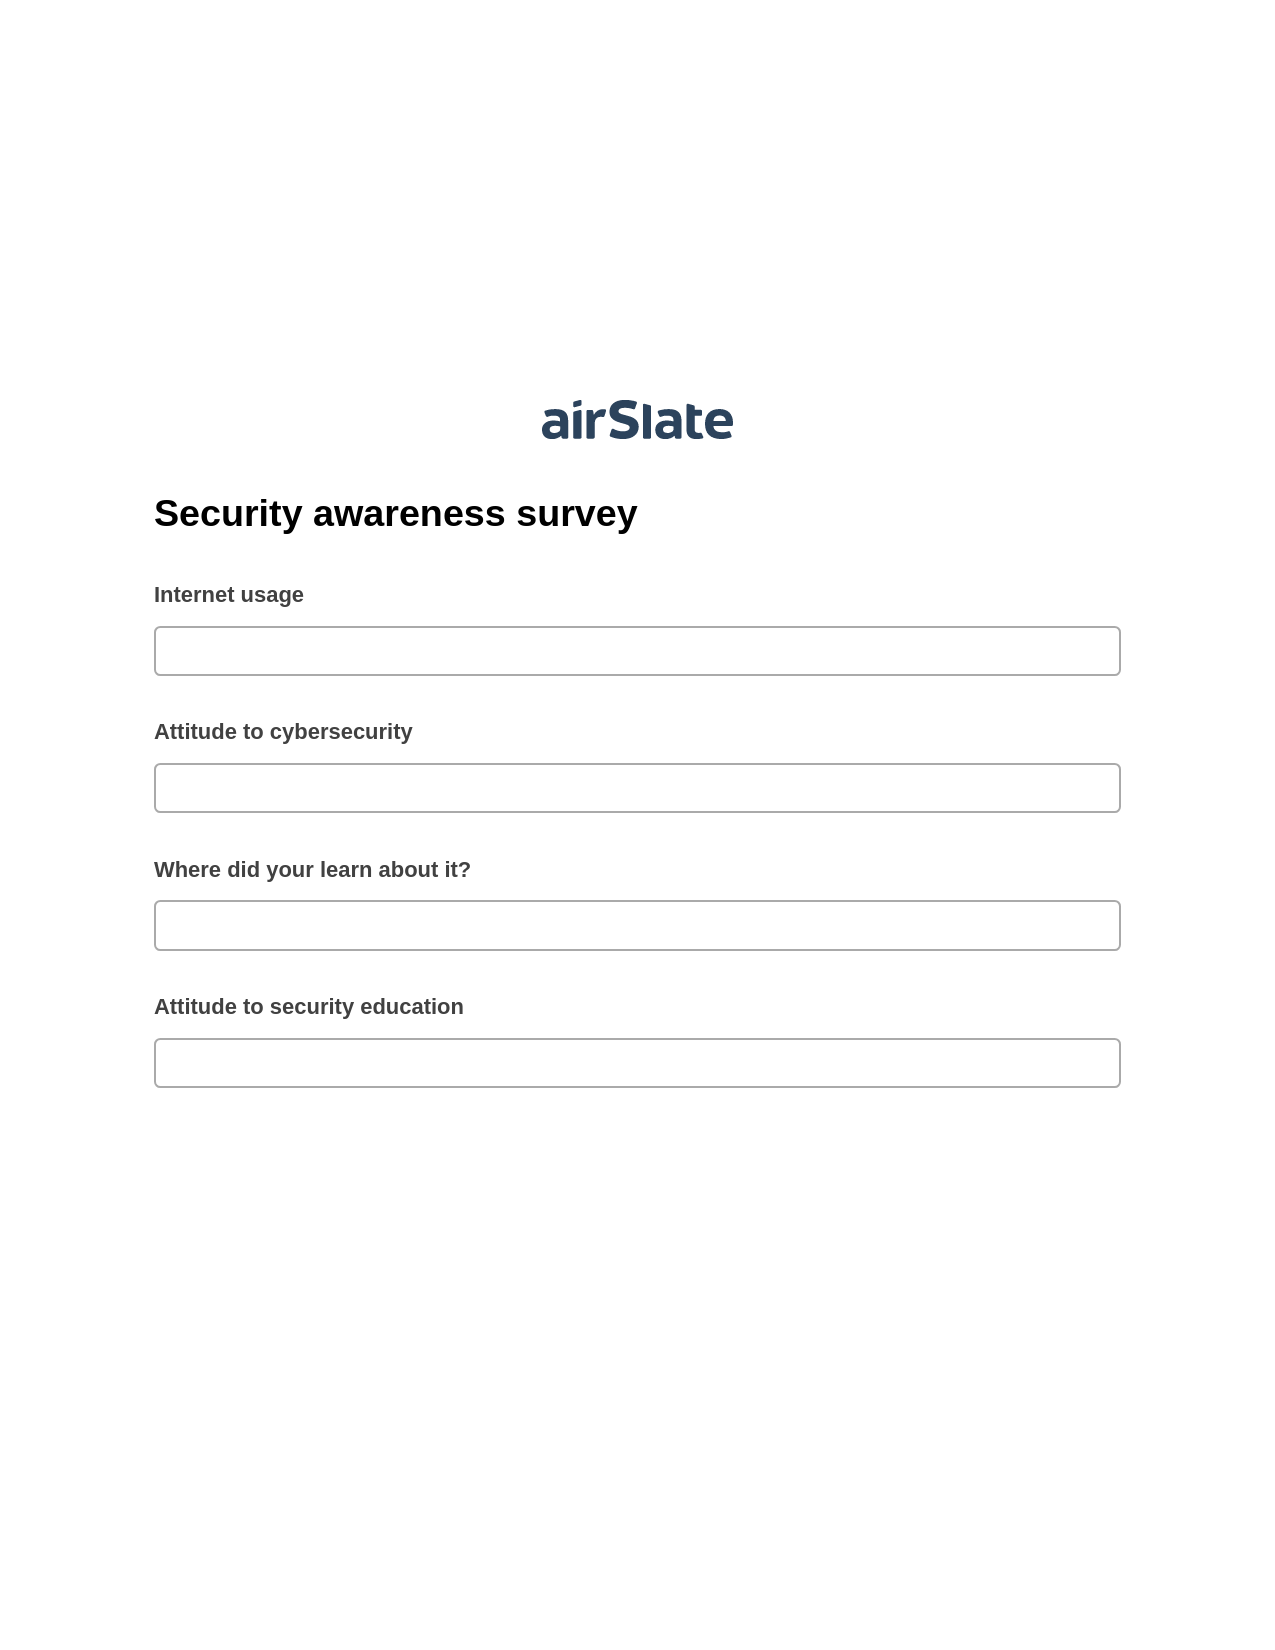 Security awareness survey Pre-fill from MySQL Dropdown Options Bot, Remove Slate Bot, Slack Notification Postfinish Bot